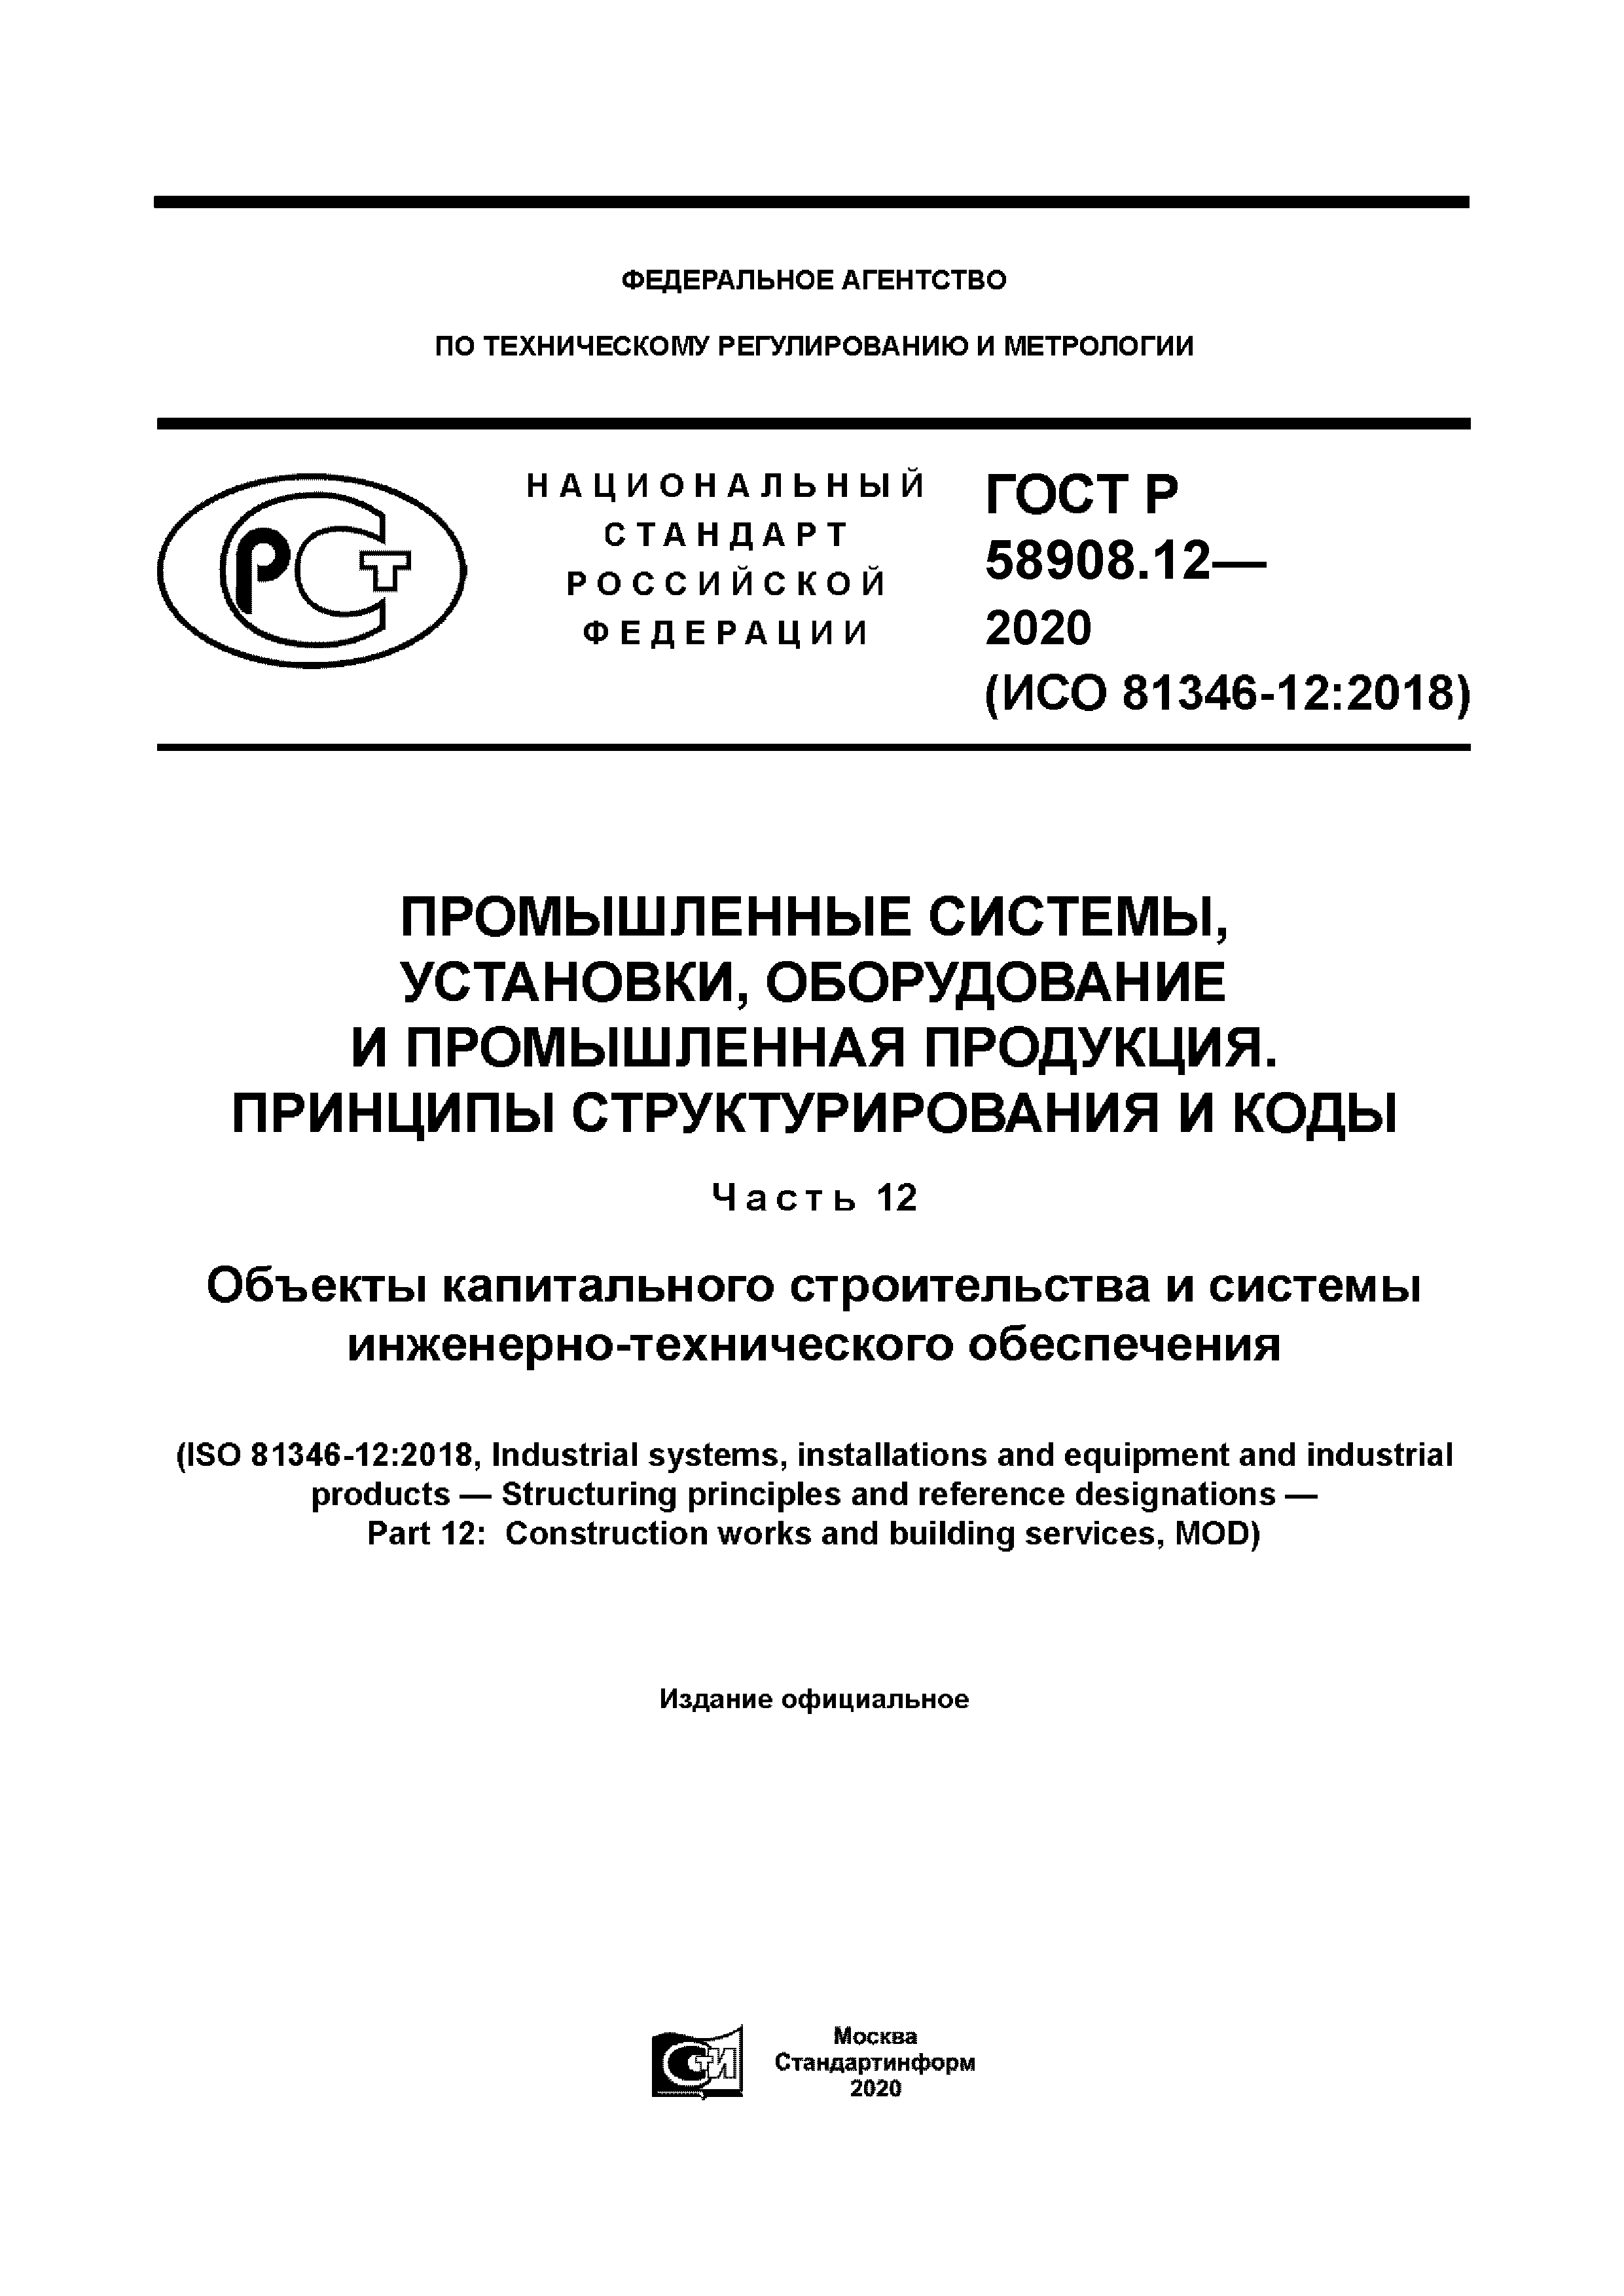 ГОСТ Р 58908.12-2020